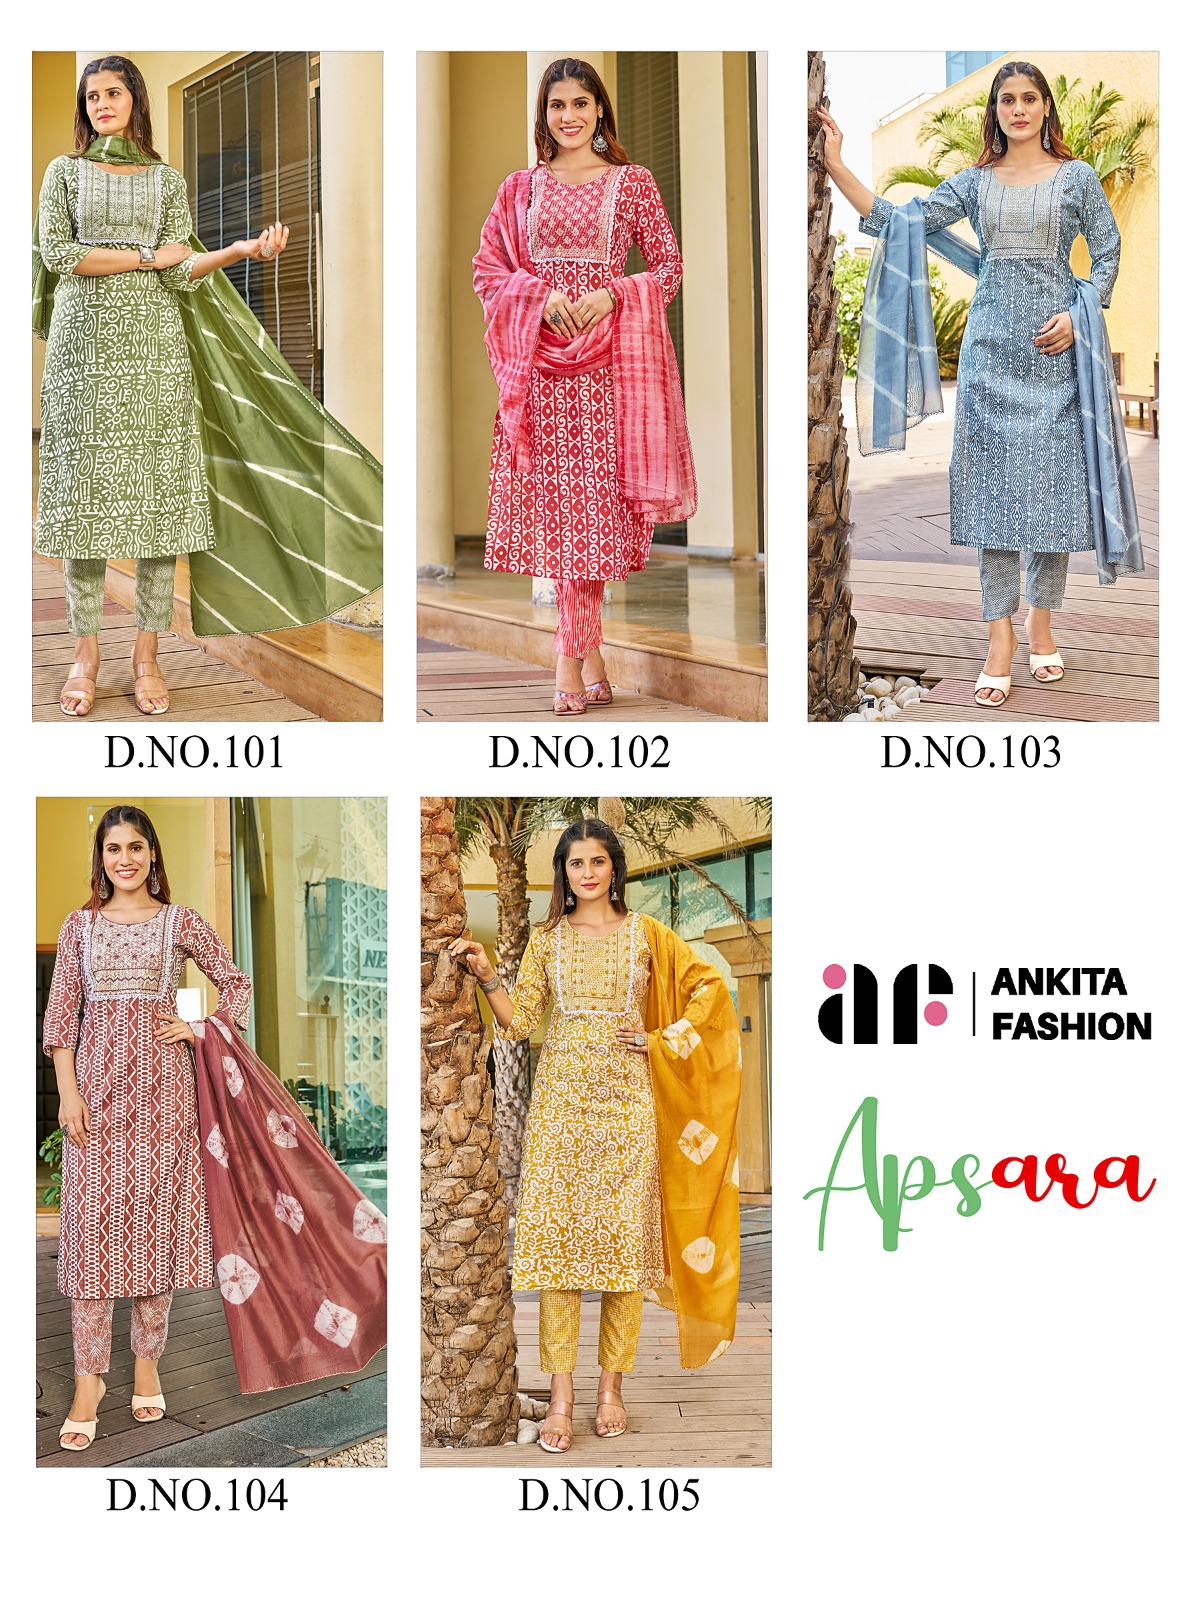 Ankita fashion Apsara collection 4